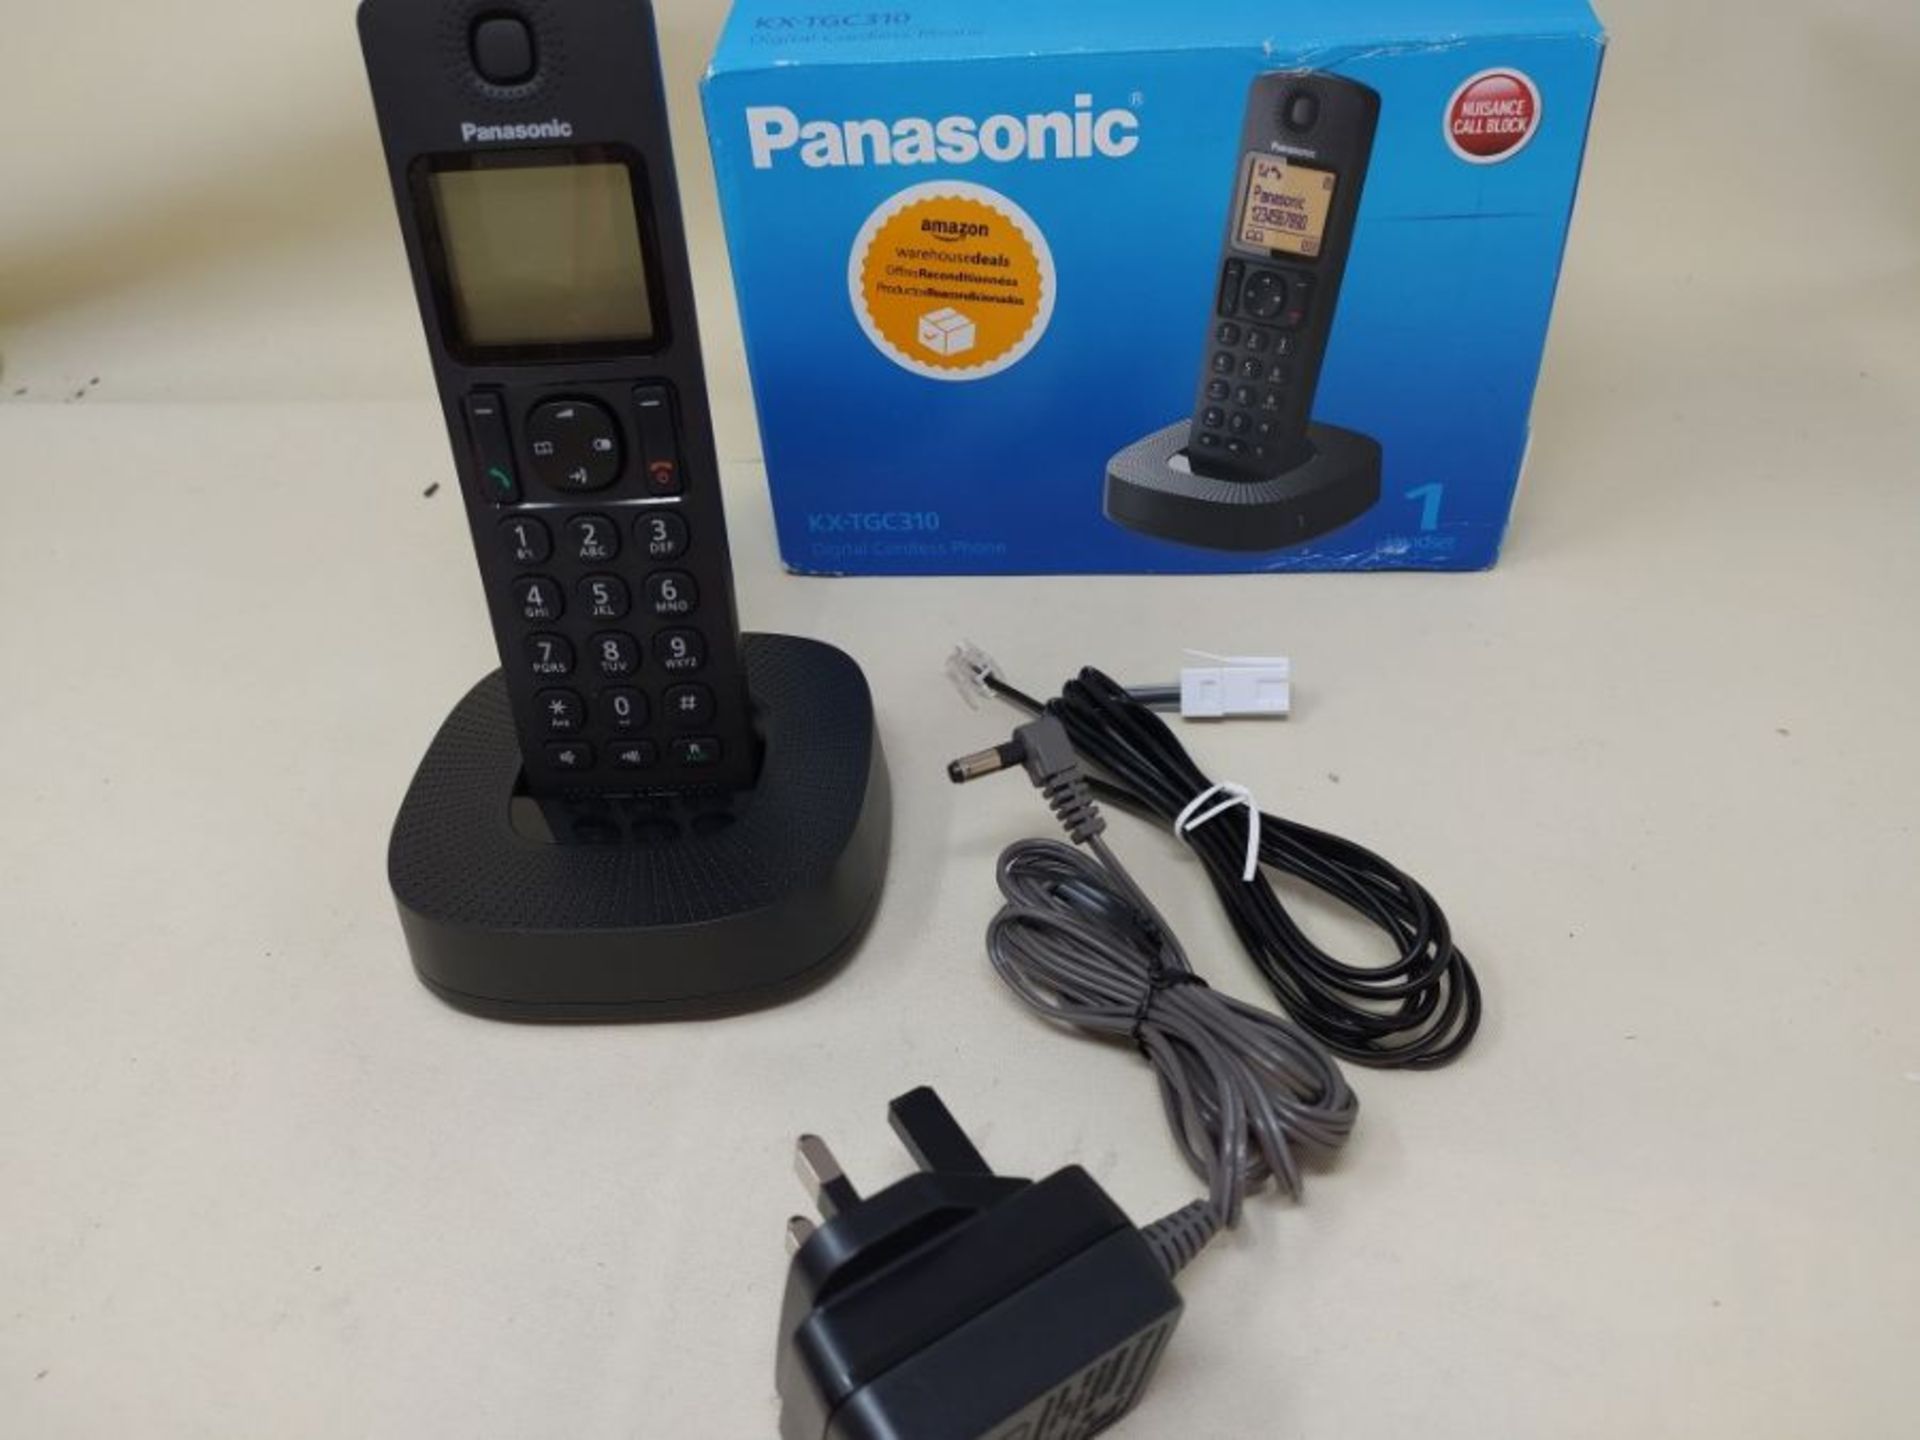 Panasonic KX-TGC310EB Digital Cordless Phone with Nuisance Call Blocker - Black - Image 4 of 4